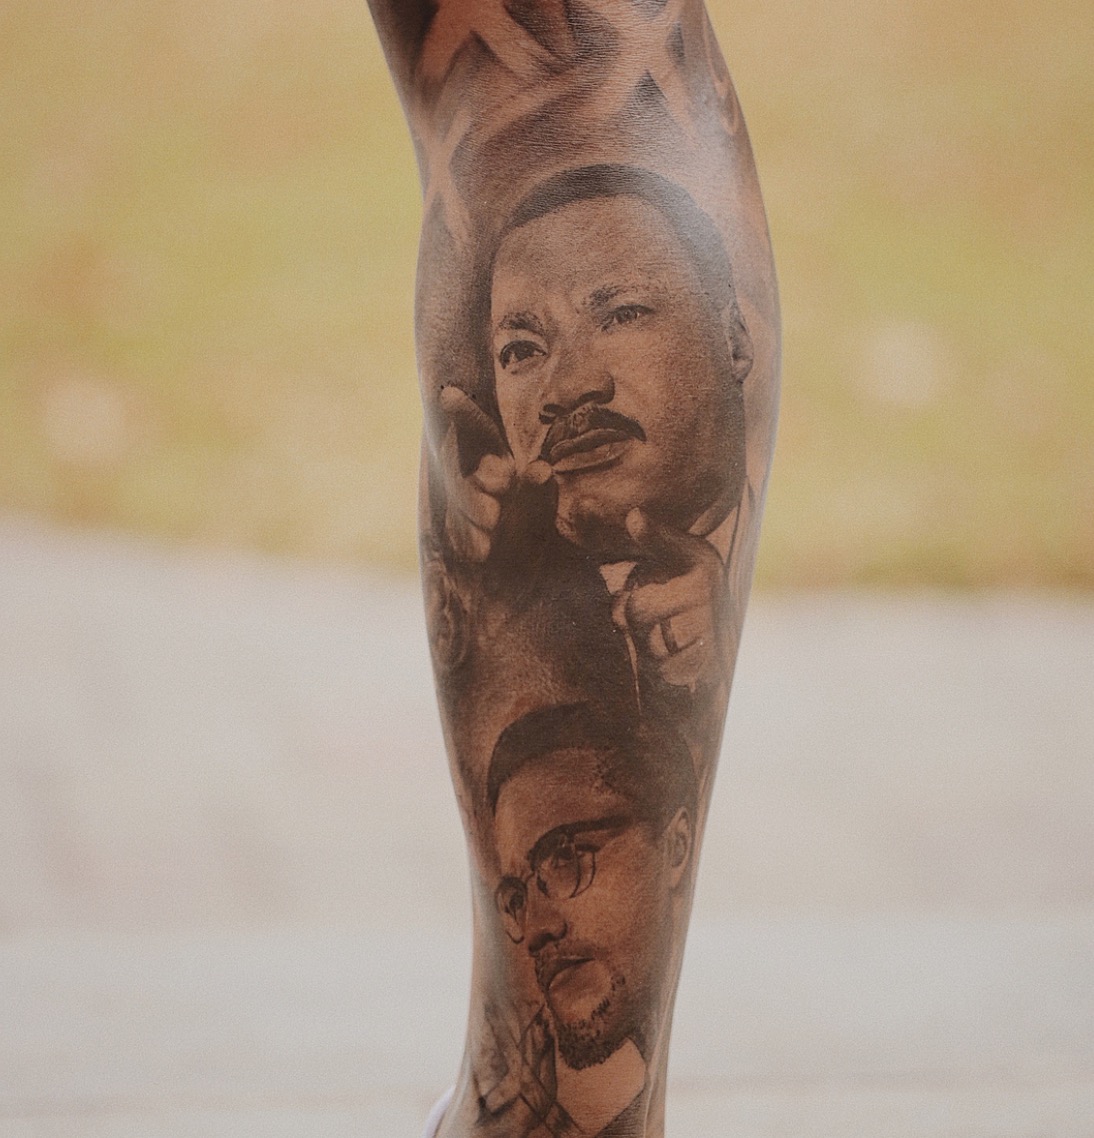 Odell Beckham Jr.'s black and grey leg sleeve tattoo.